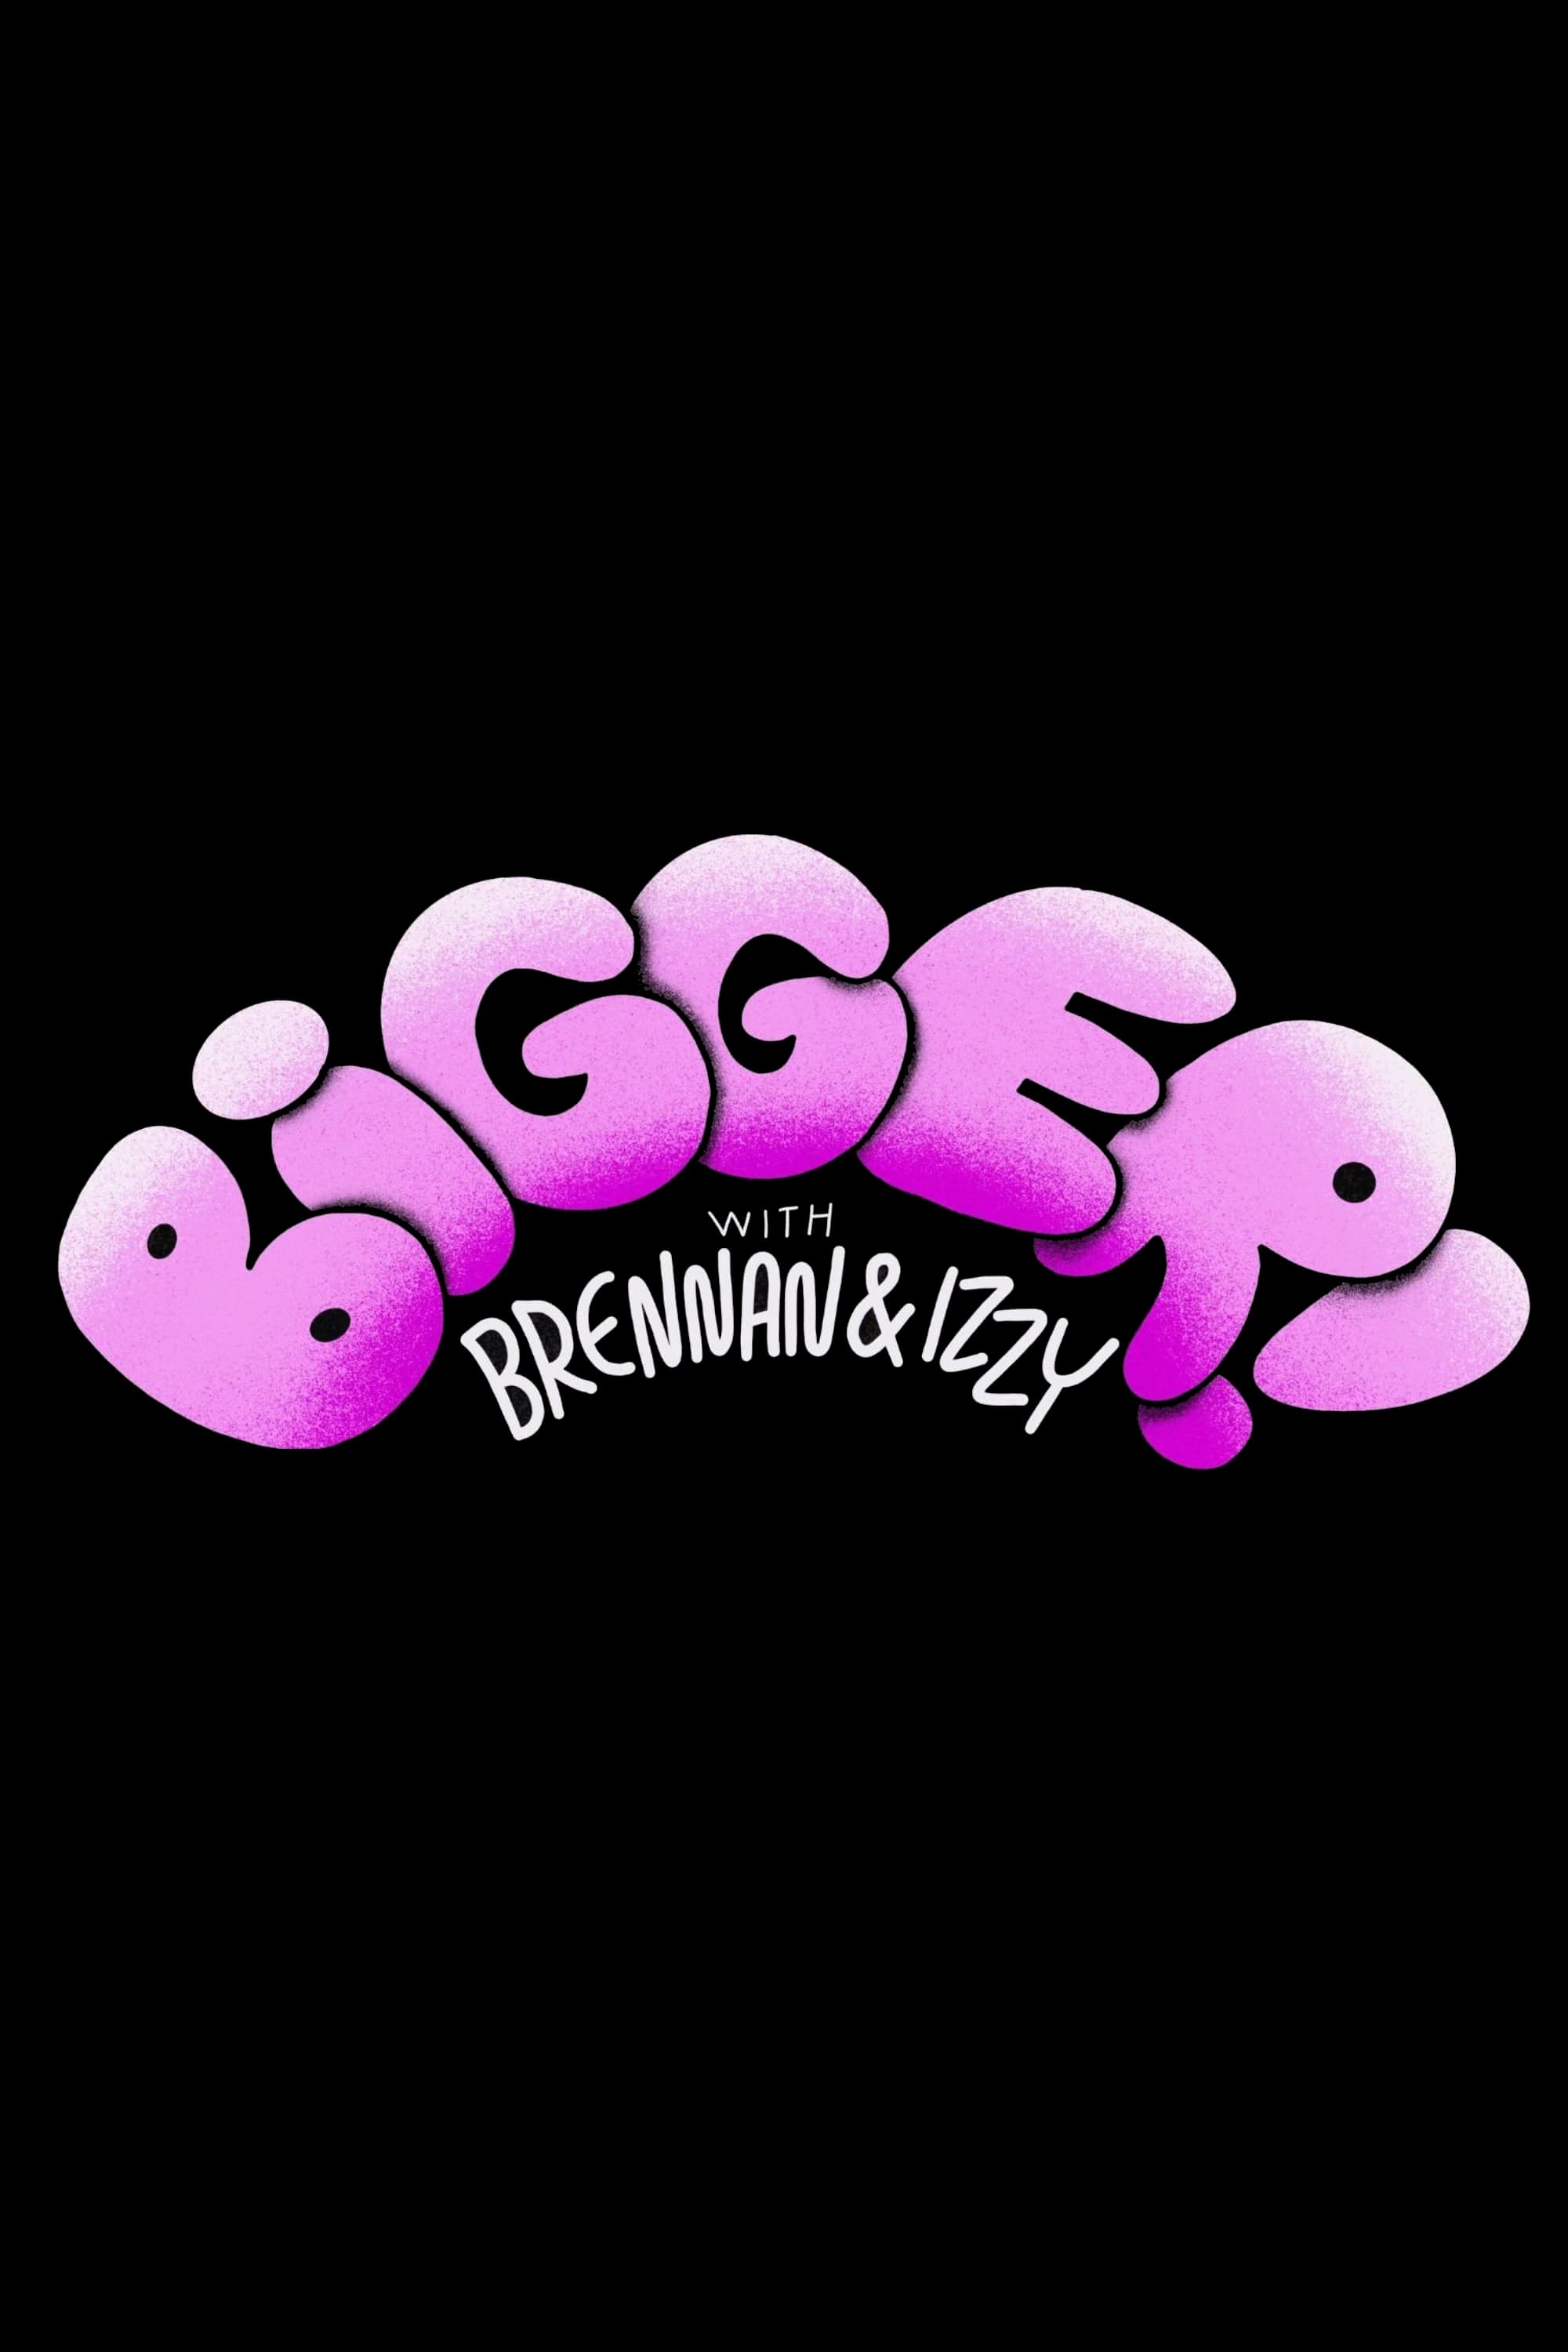 BIGGER! with Brennan & Izzy